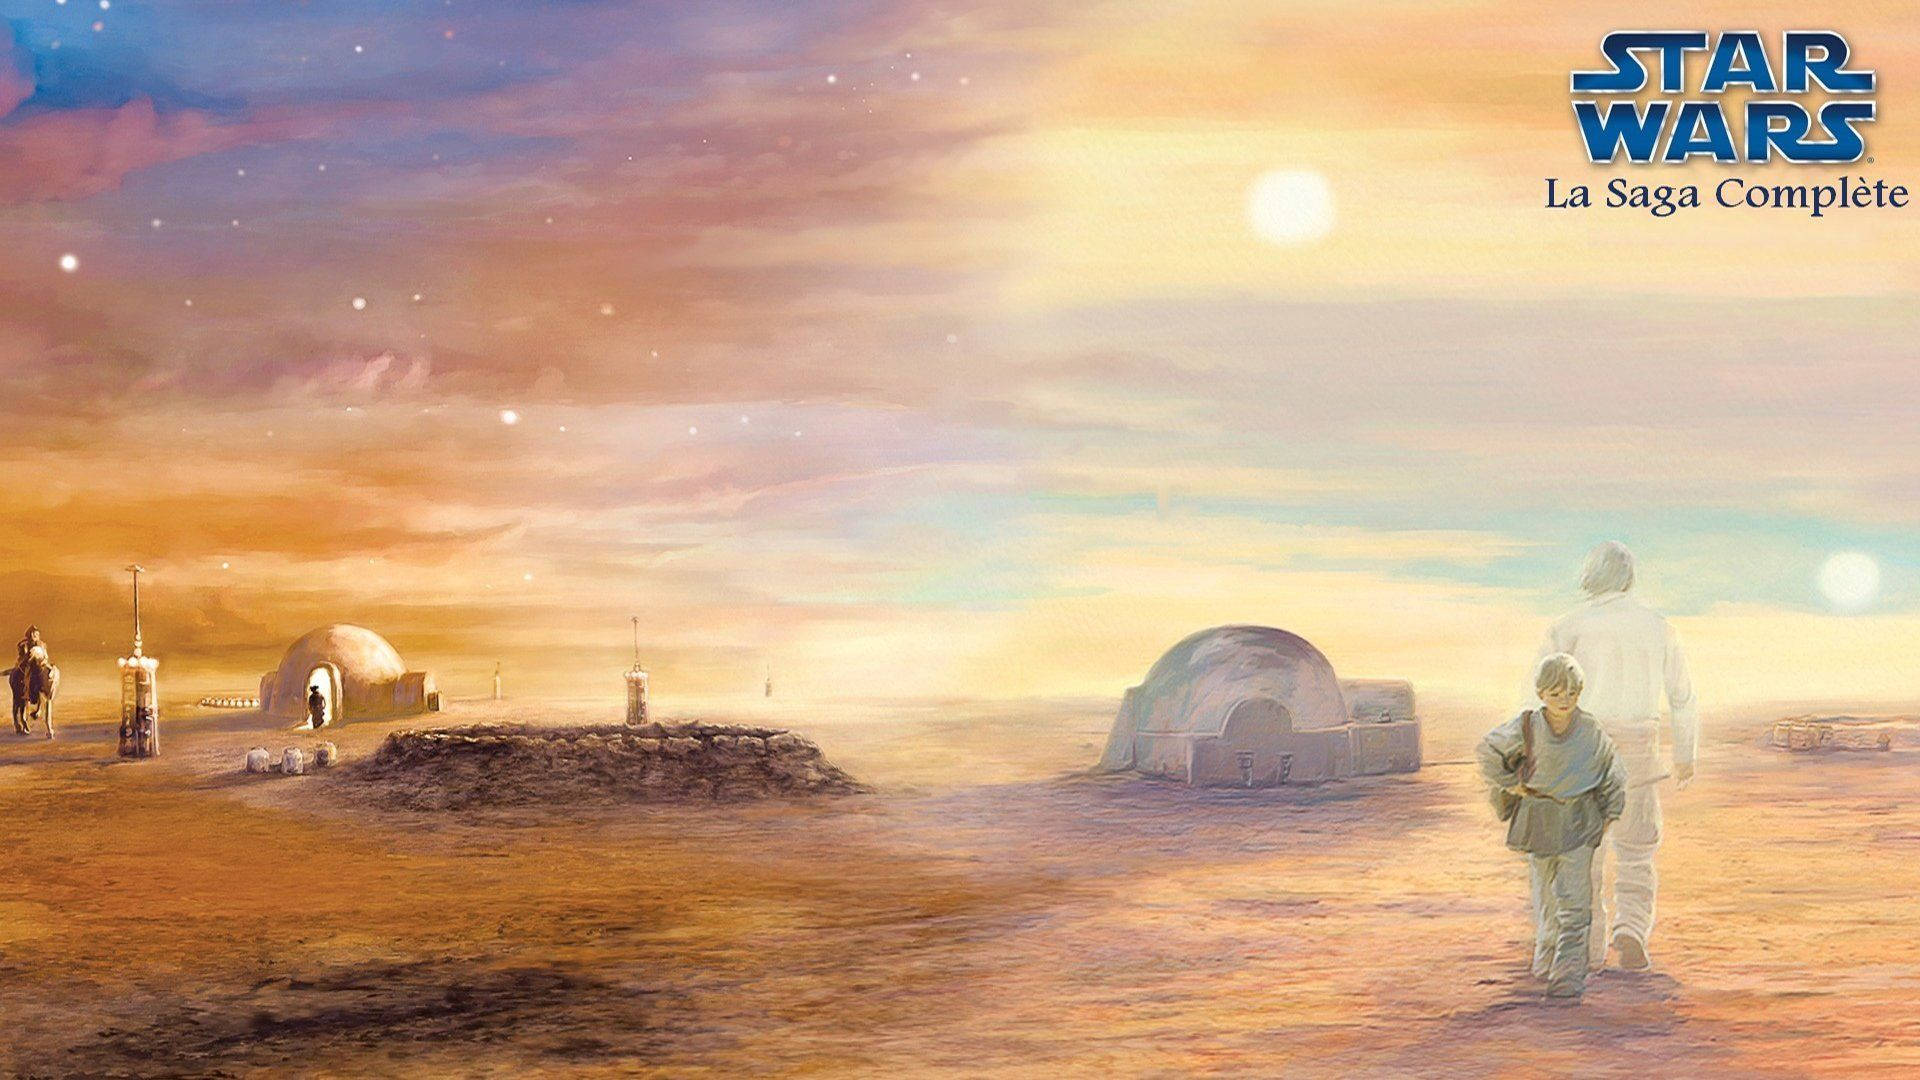 "An Epic Star Wars Landscape" Wallpaper